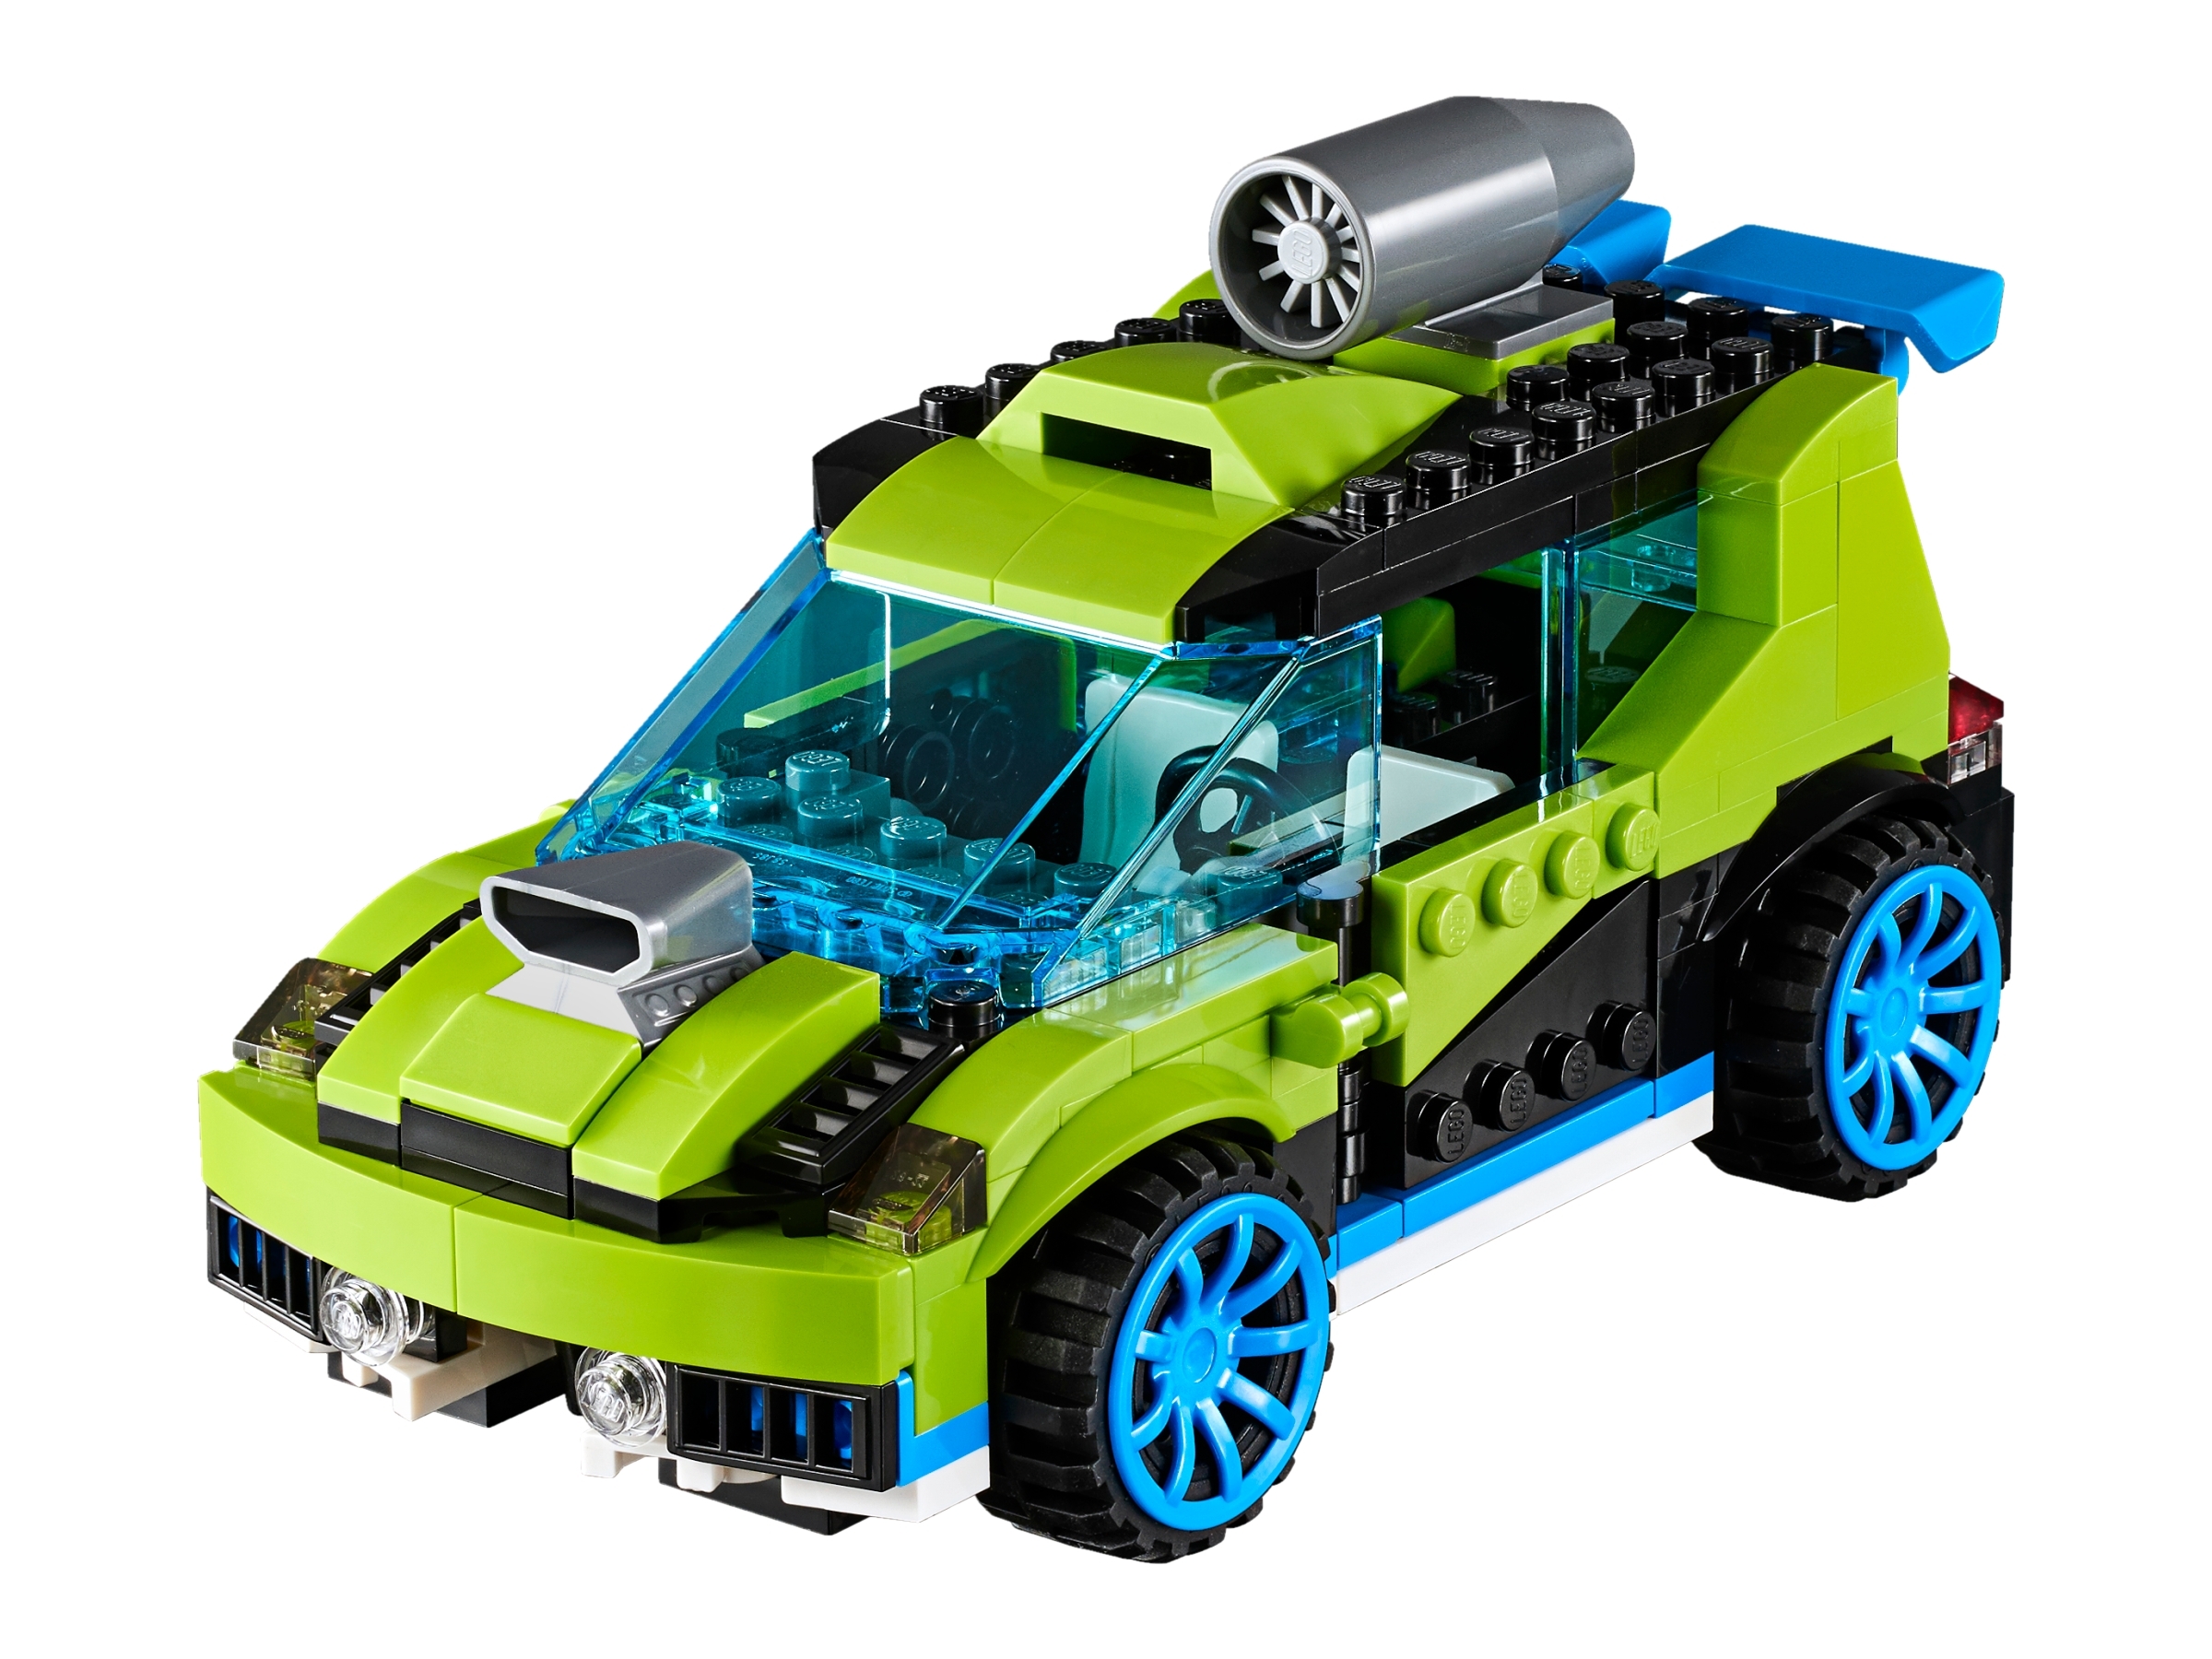 lego creator 31074 3 in 1 rocket rally car